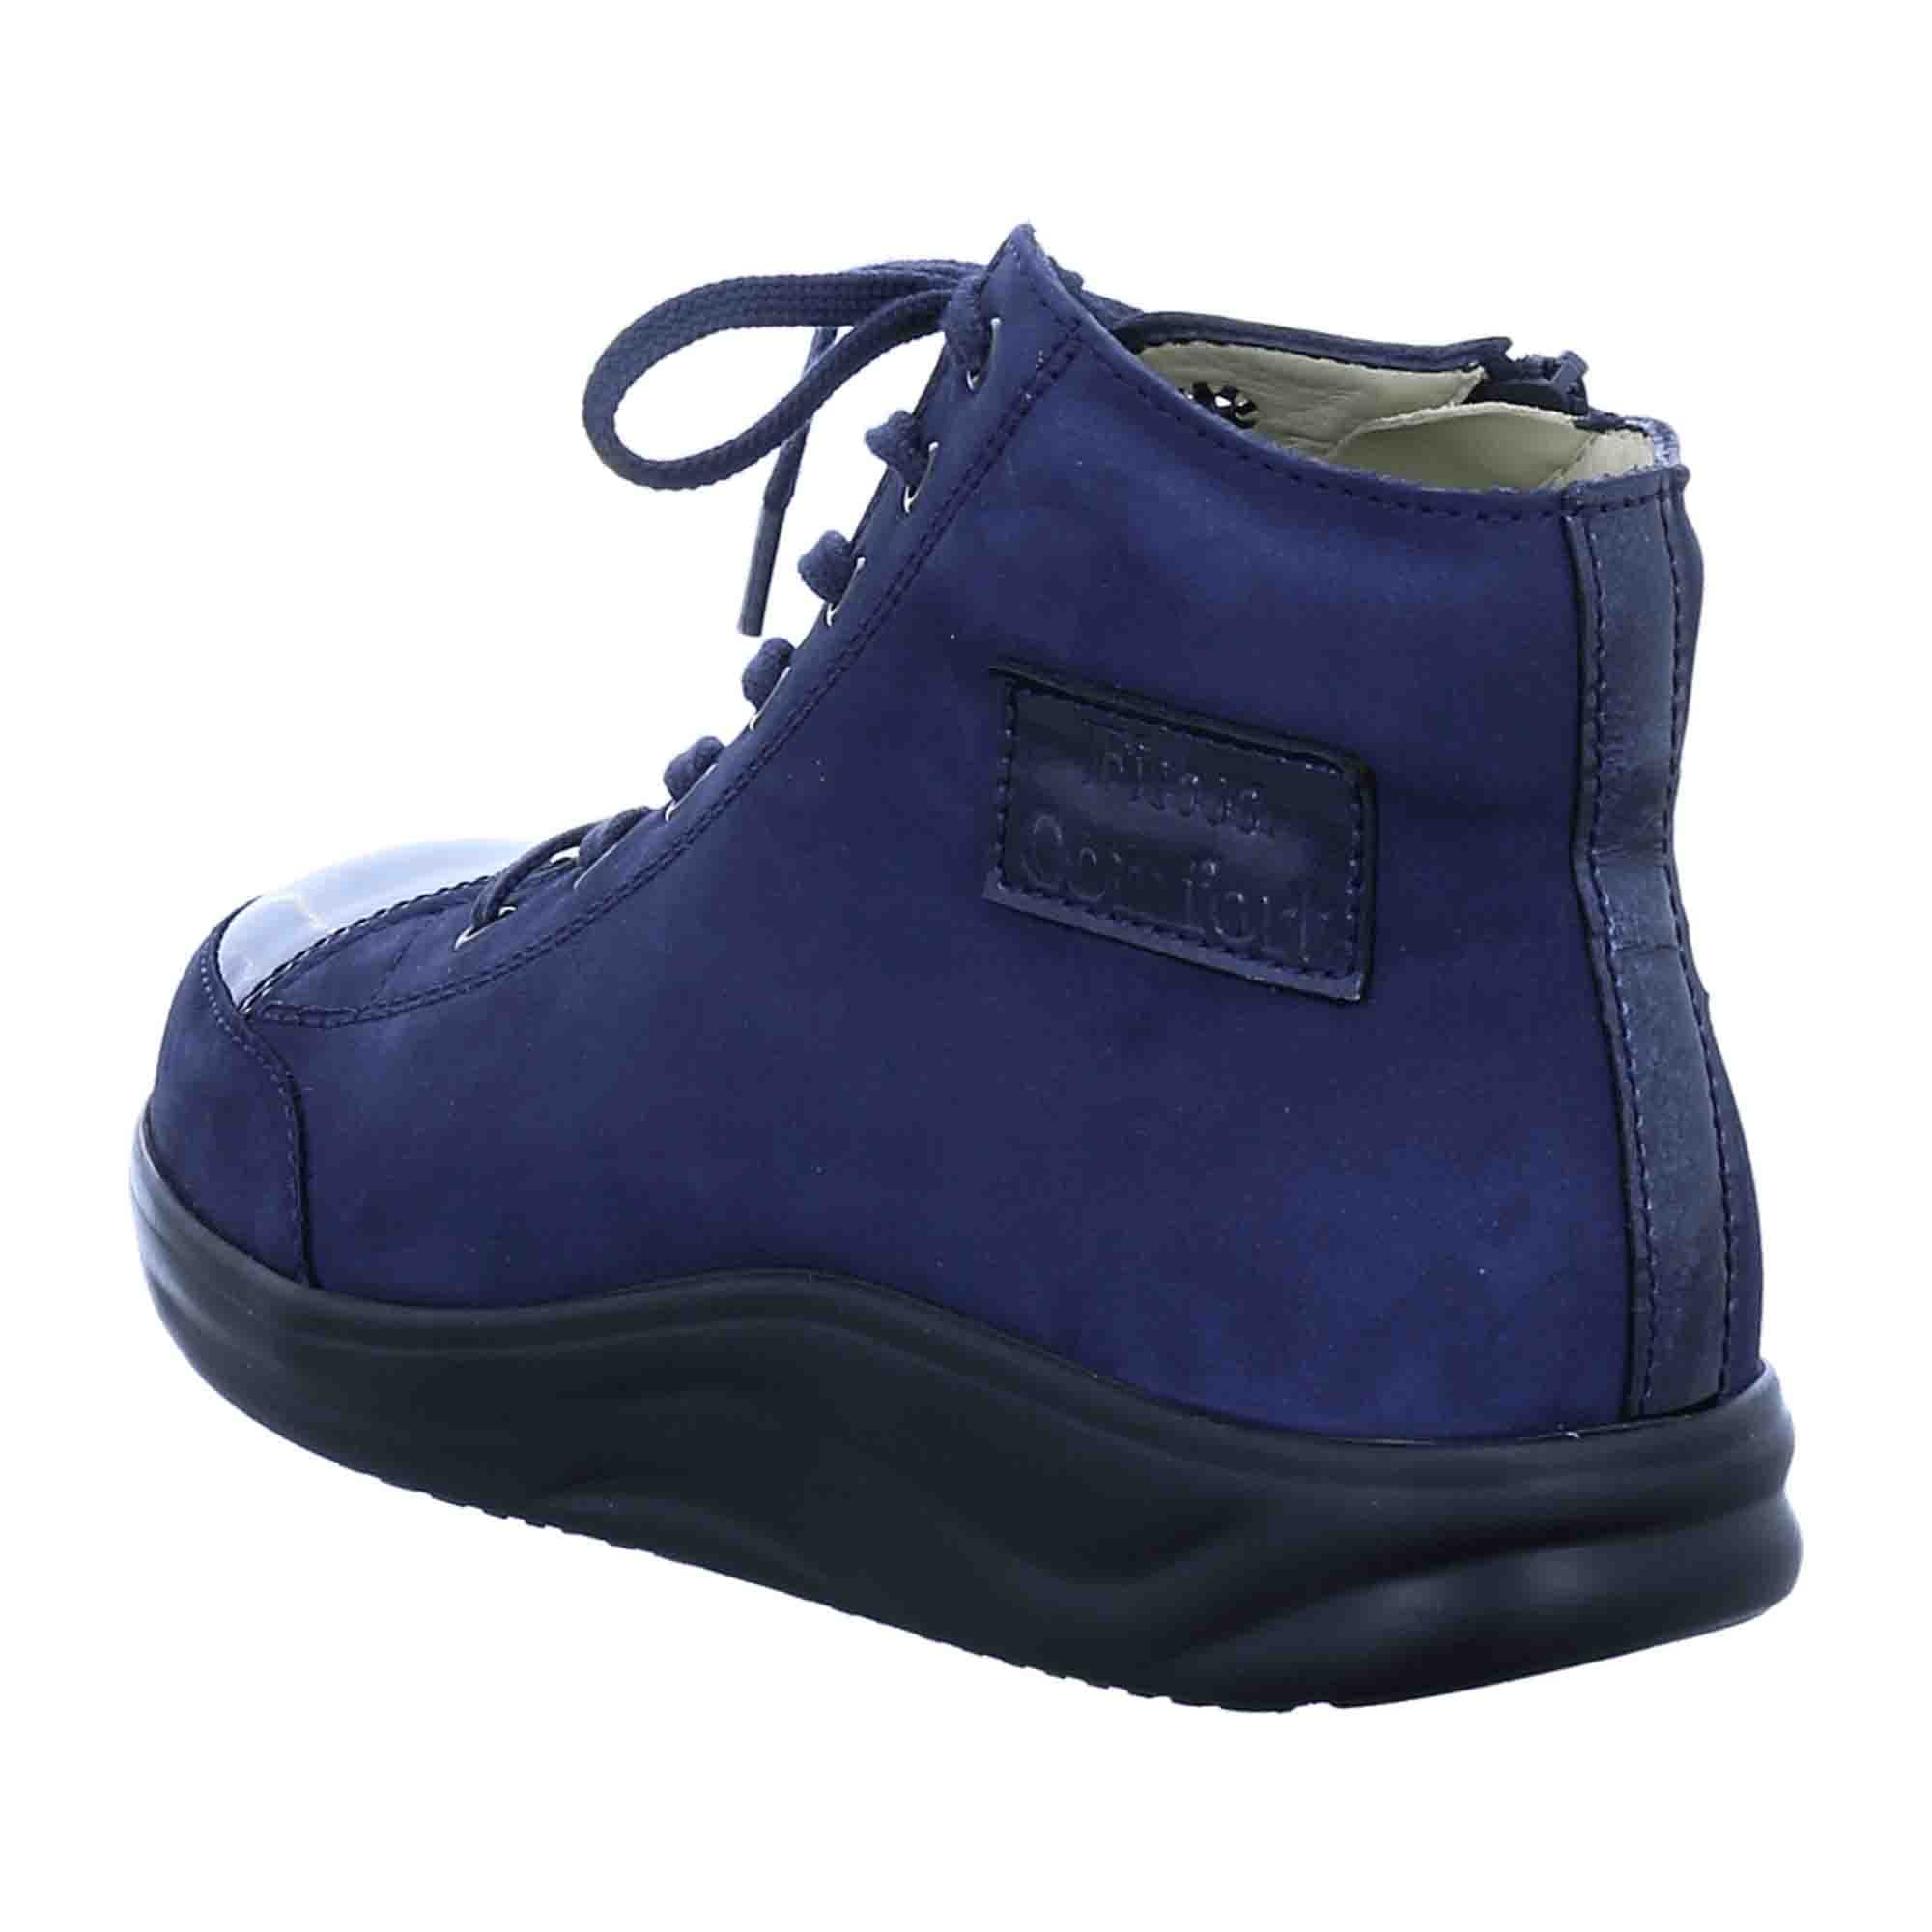 Finn Comfort Holten Women's Comfortable Sneakers, Stylish Blue